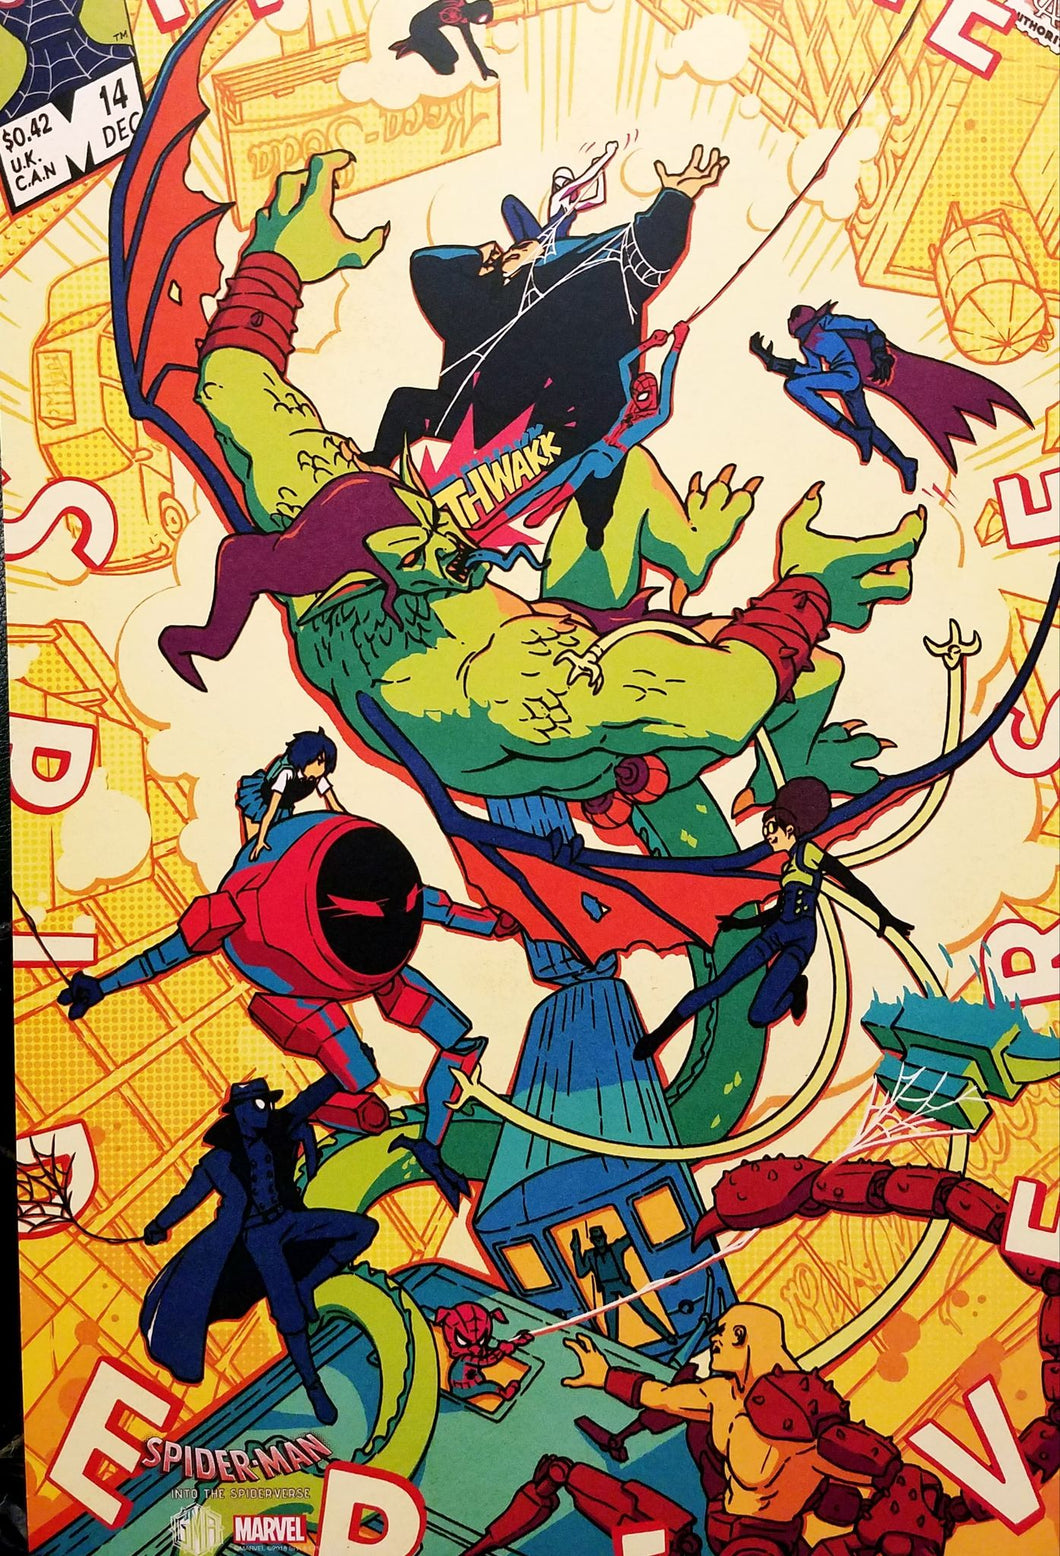 Spider-Verse 11x16 Art Print Poster (Miles Morales Spider-Man, Marvel Comics)